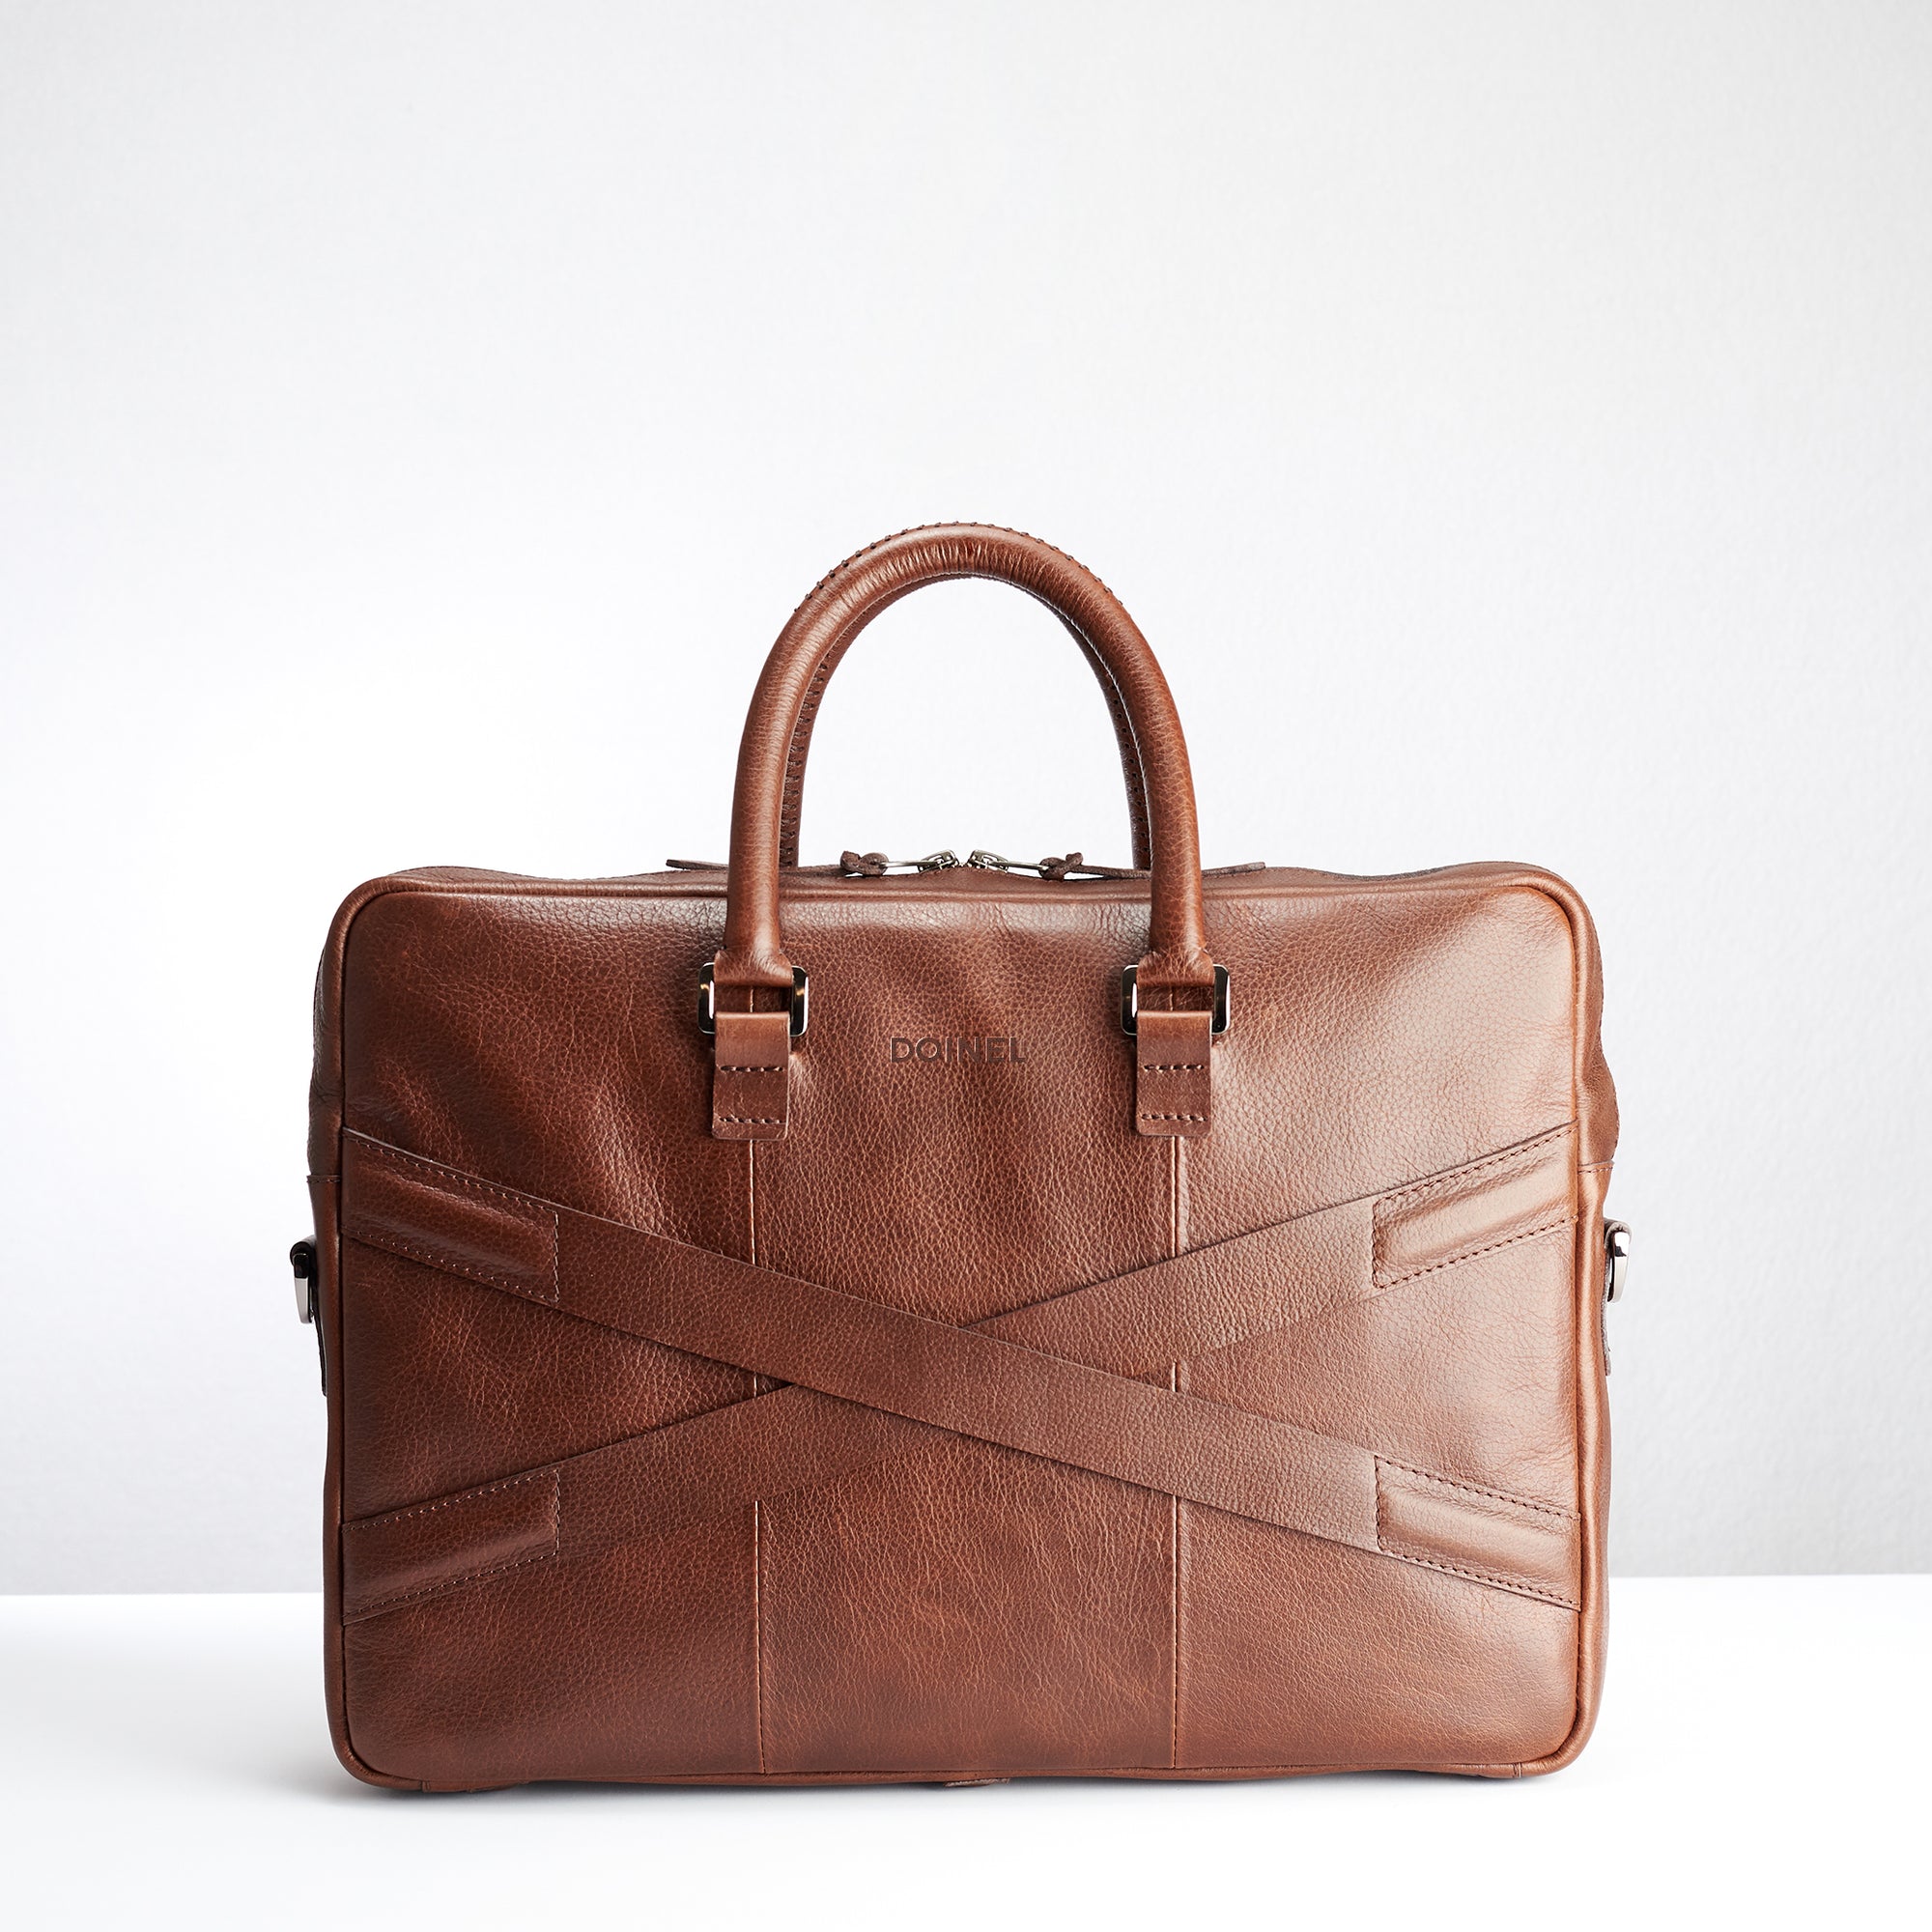 Back and luggage strap for slim portfolio .Brown leather briefcase laptop bag for men. Gazeli laptop briefcase by Capra Leather.